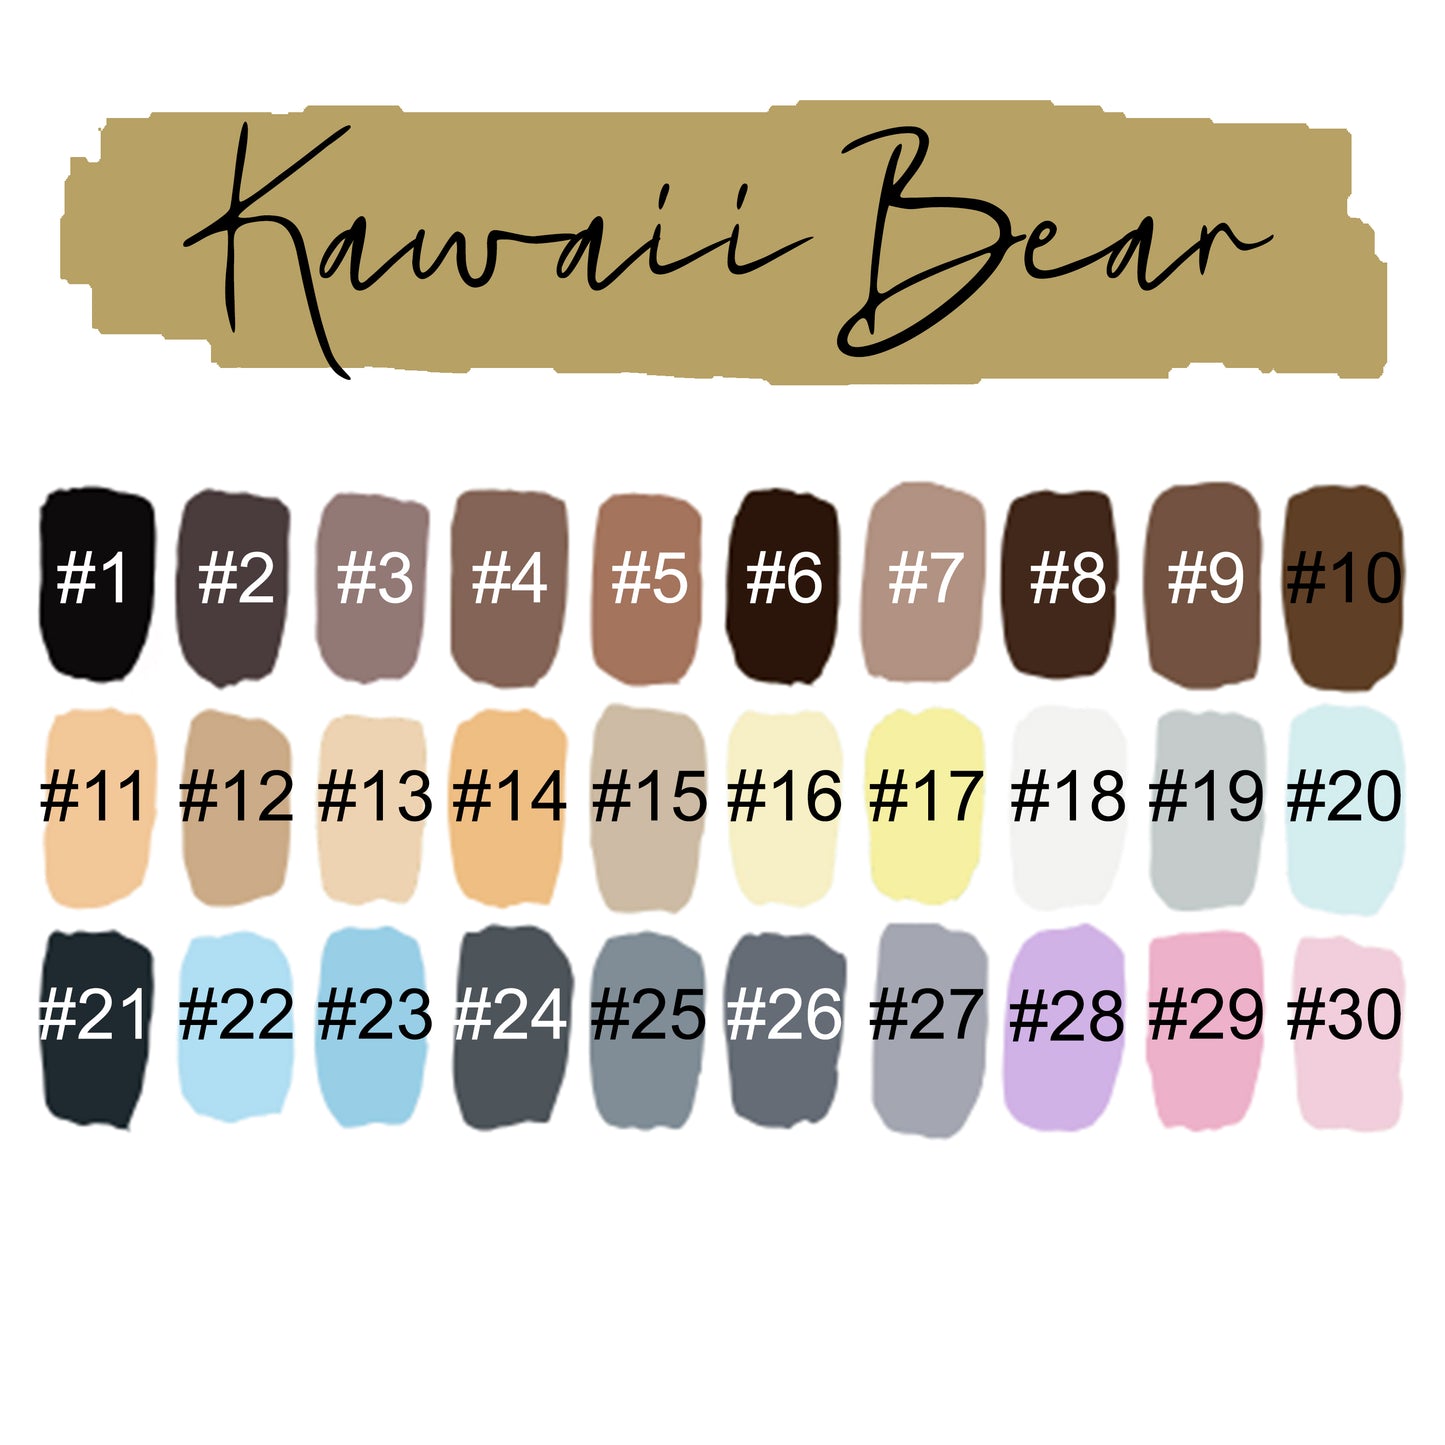 Ketiara Kawaii Bear Smudge Proof Liquid Lipstick Infused With Vitamin E, 6 ml